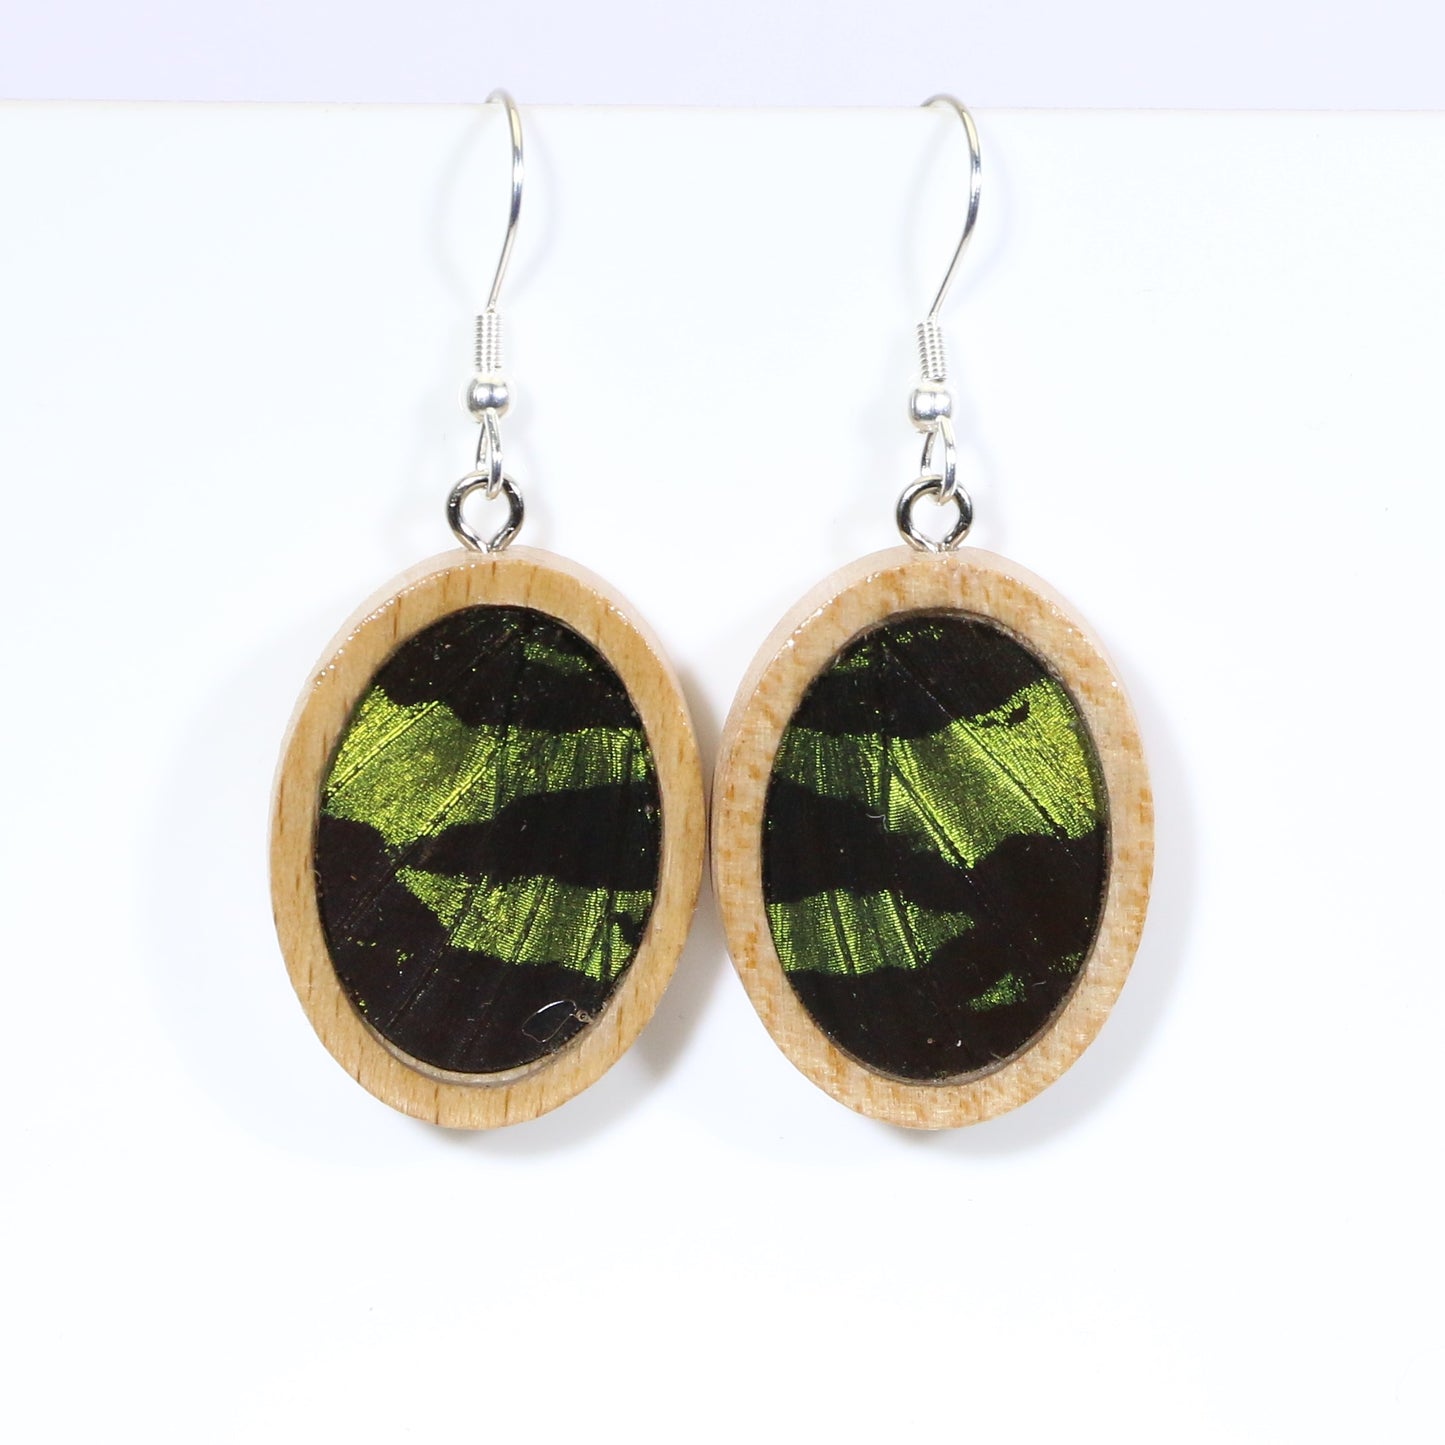 51603 - Real Butterfly Wing Jewelry - Earrings - Medium - Tan Wood - Sunset Moth - Green